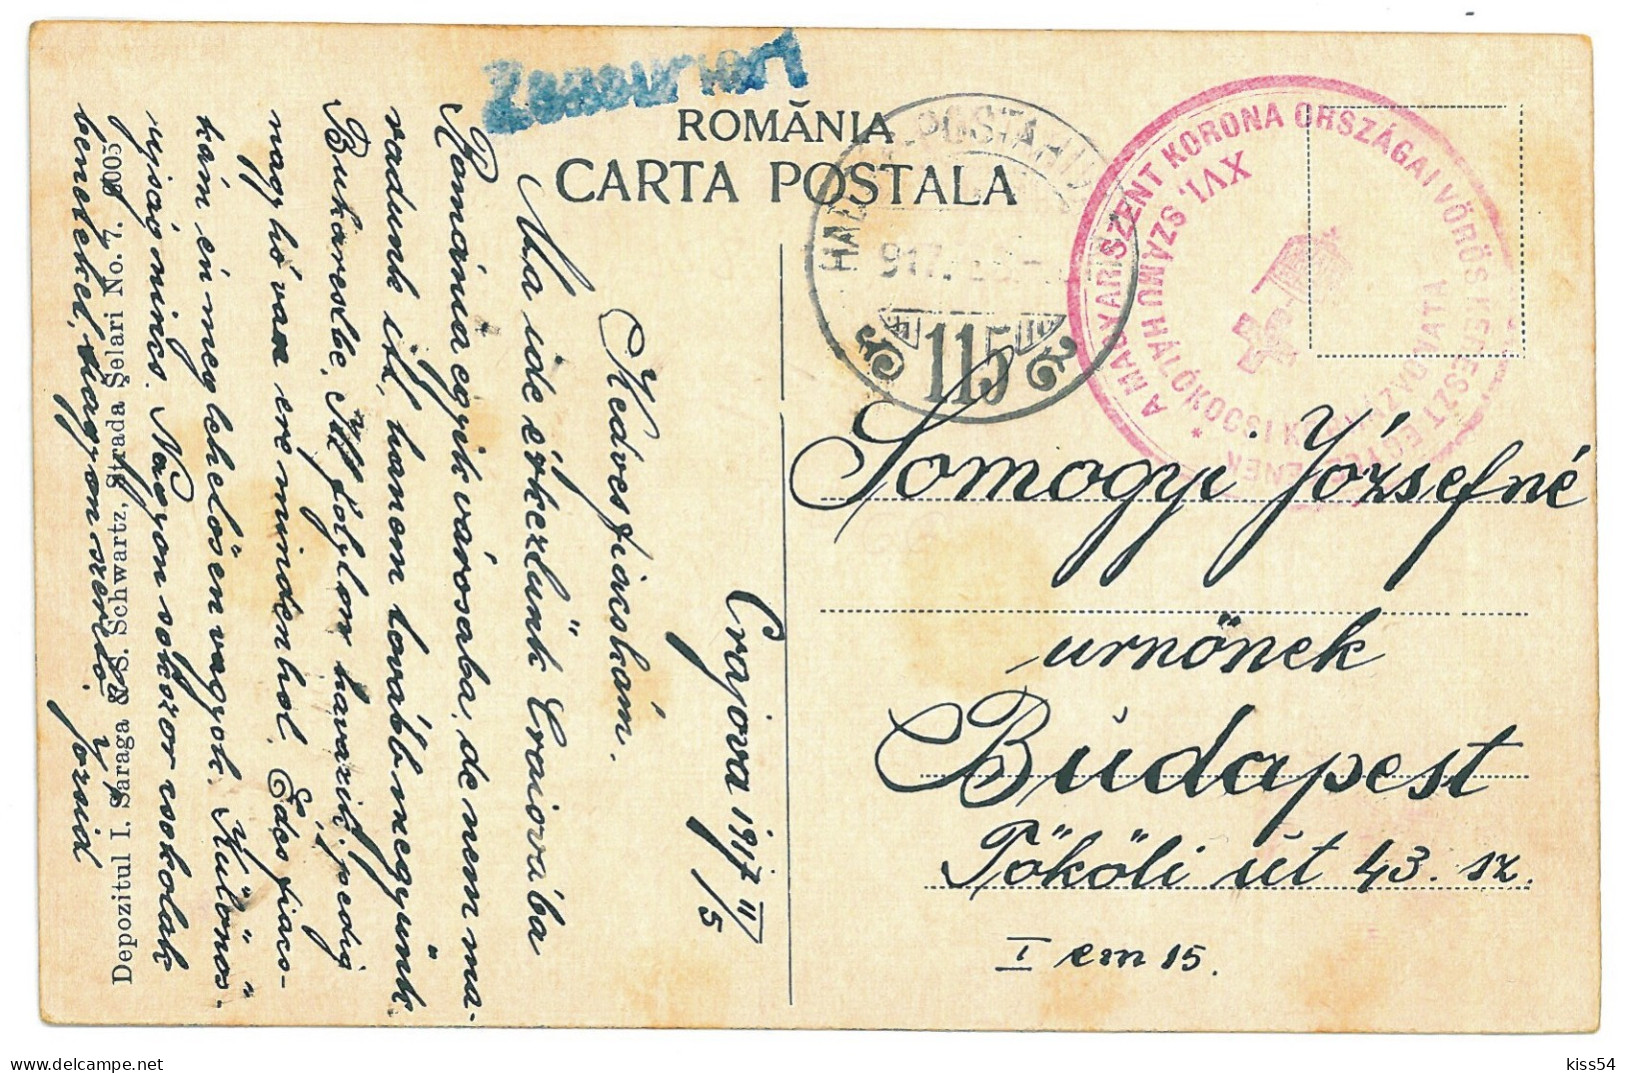 RO 999 - 20693 CRAIOVA, Street Stores, Romania - Old Postcard, CENSOR - Used - 1917 - Rumänien